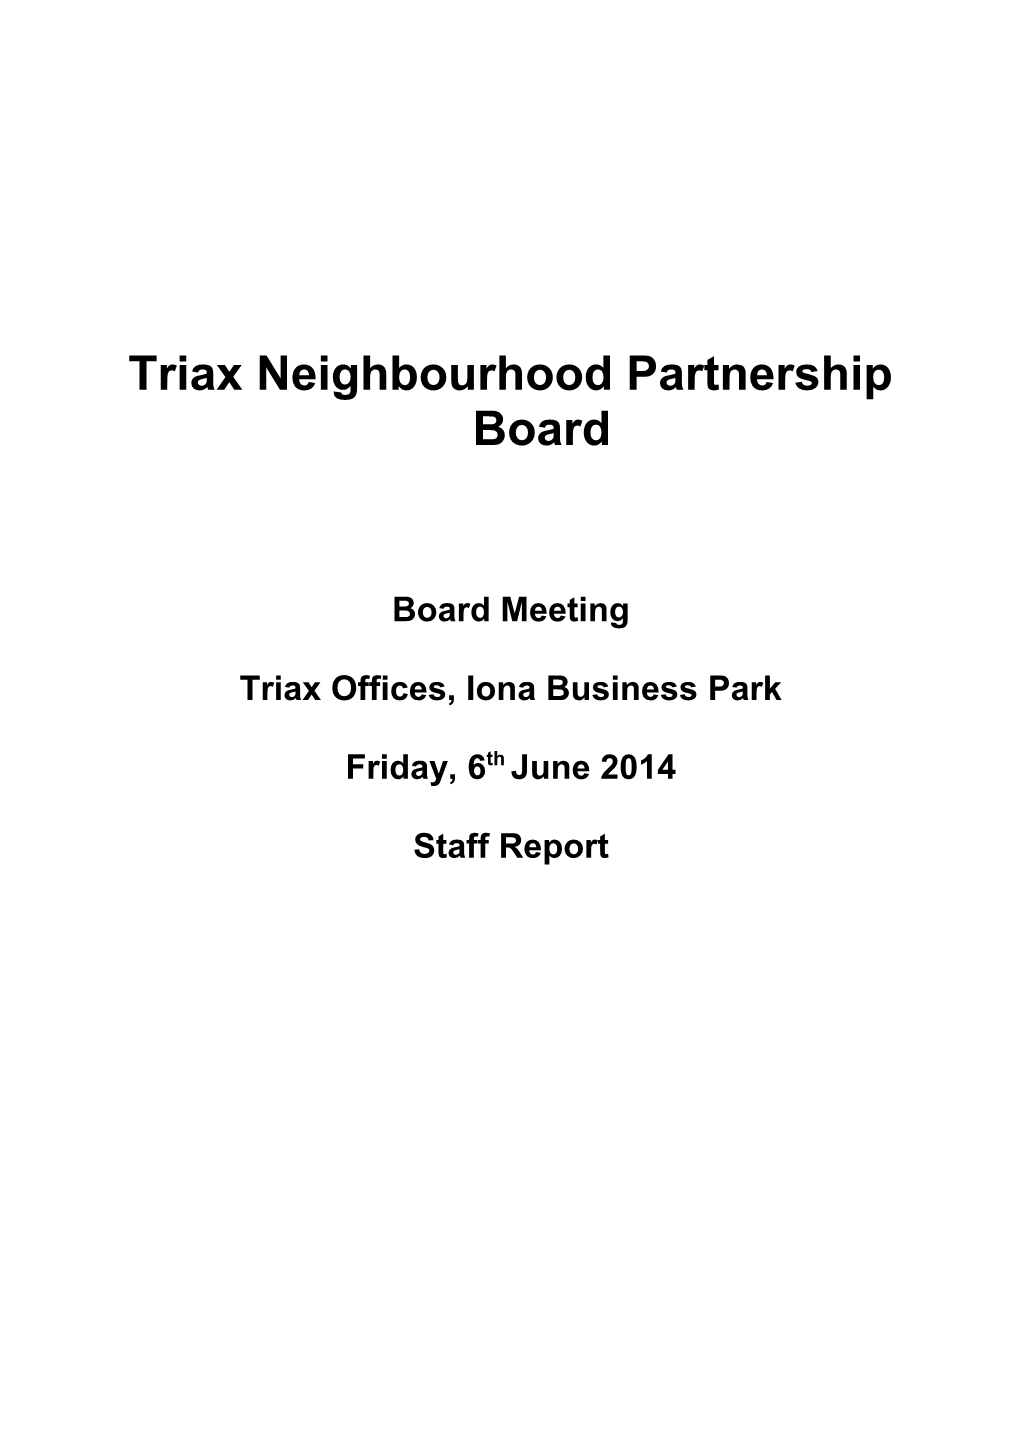 Triax Neighbourhood Partnership Board